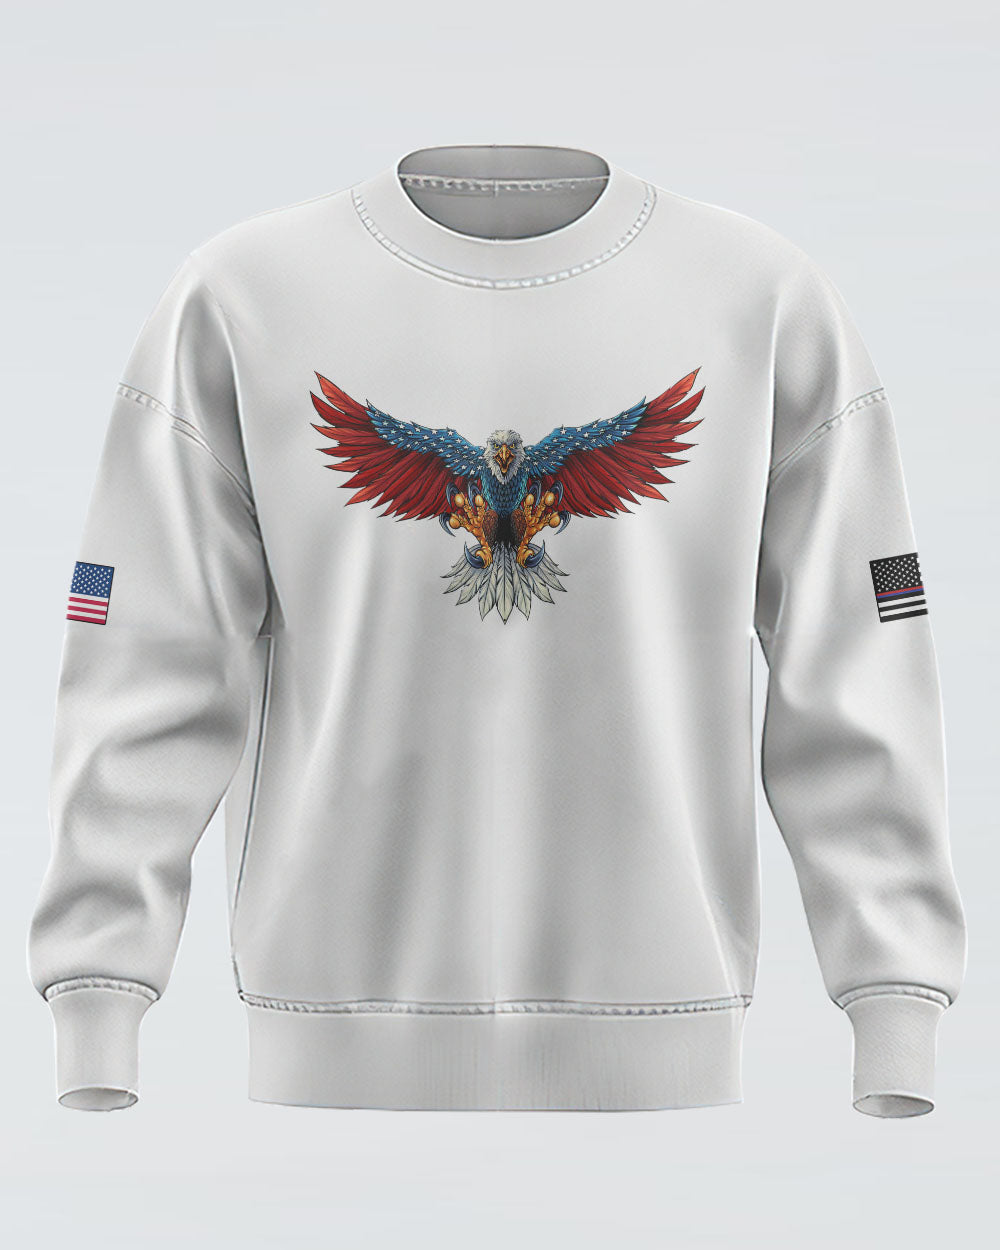 Back The Brave Eagle Flag Women's Christian Sweatshirt